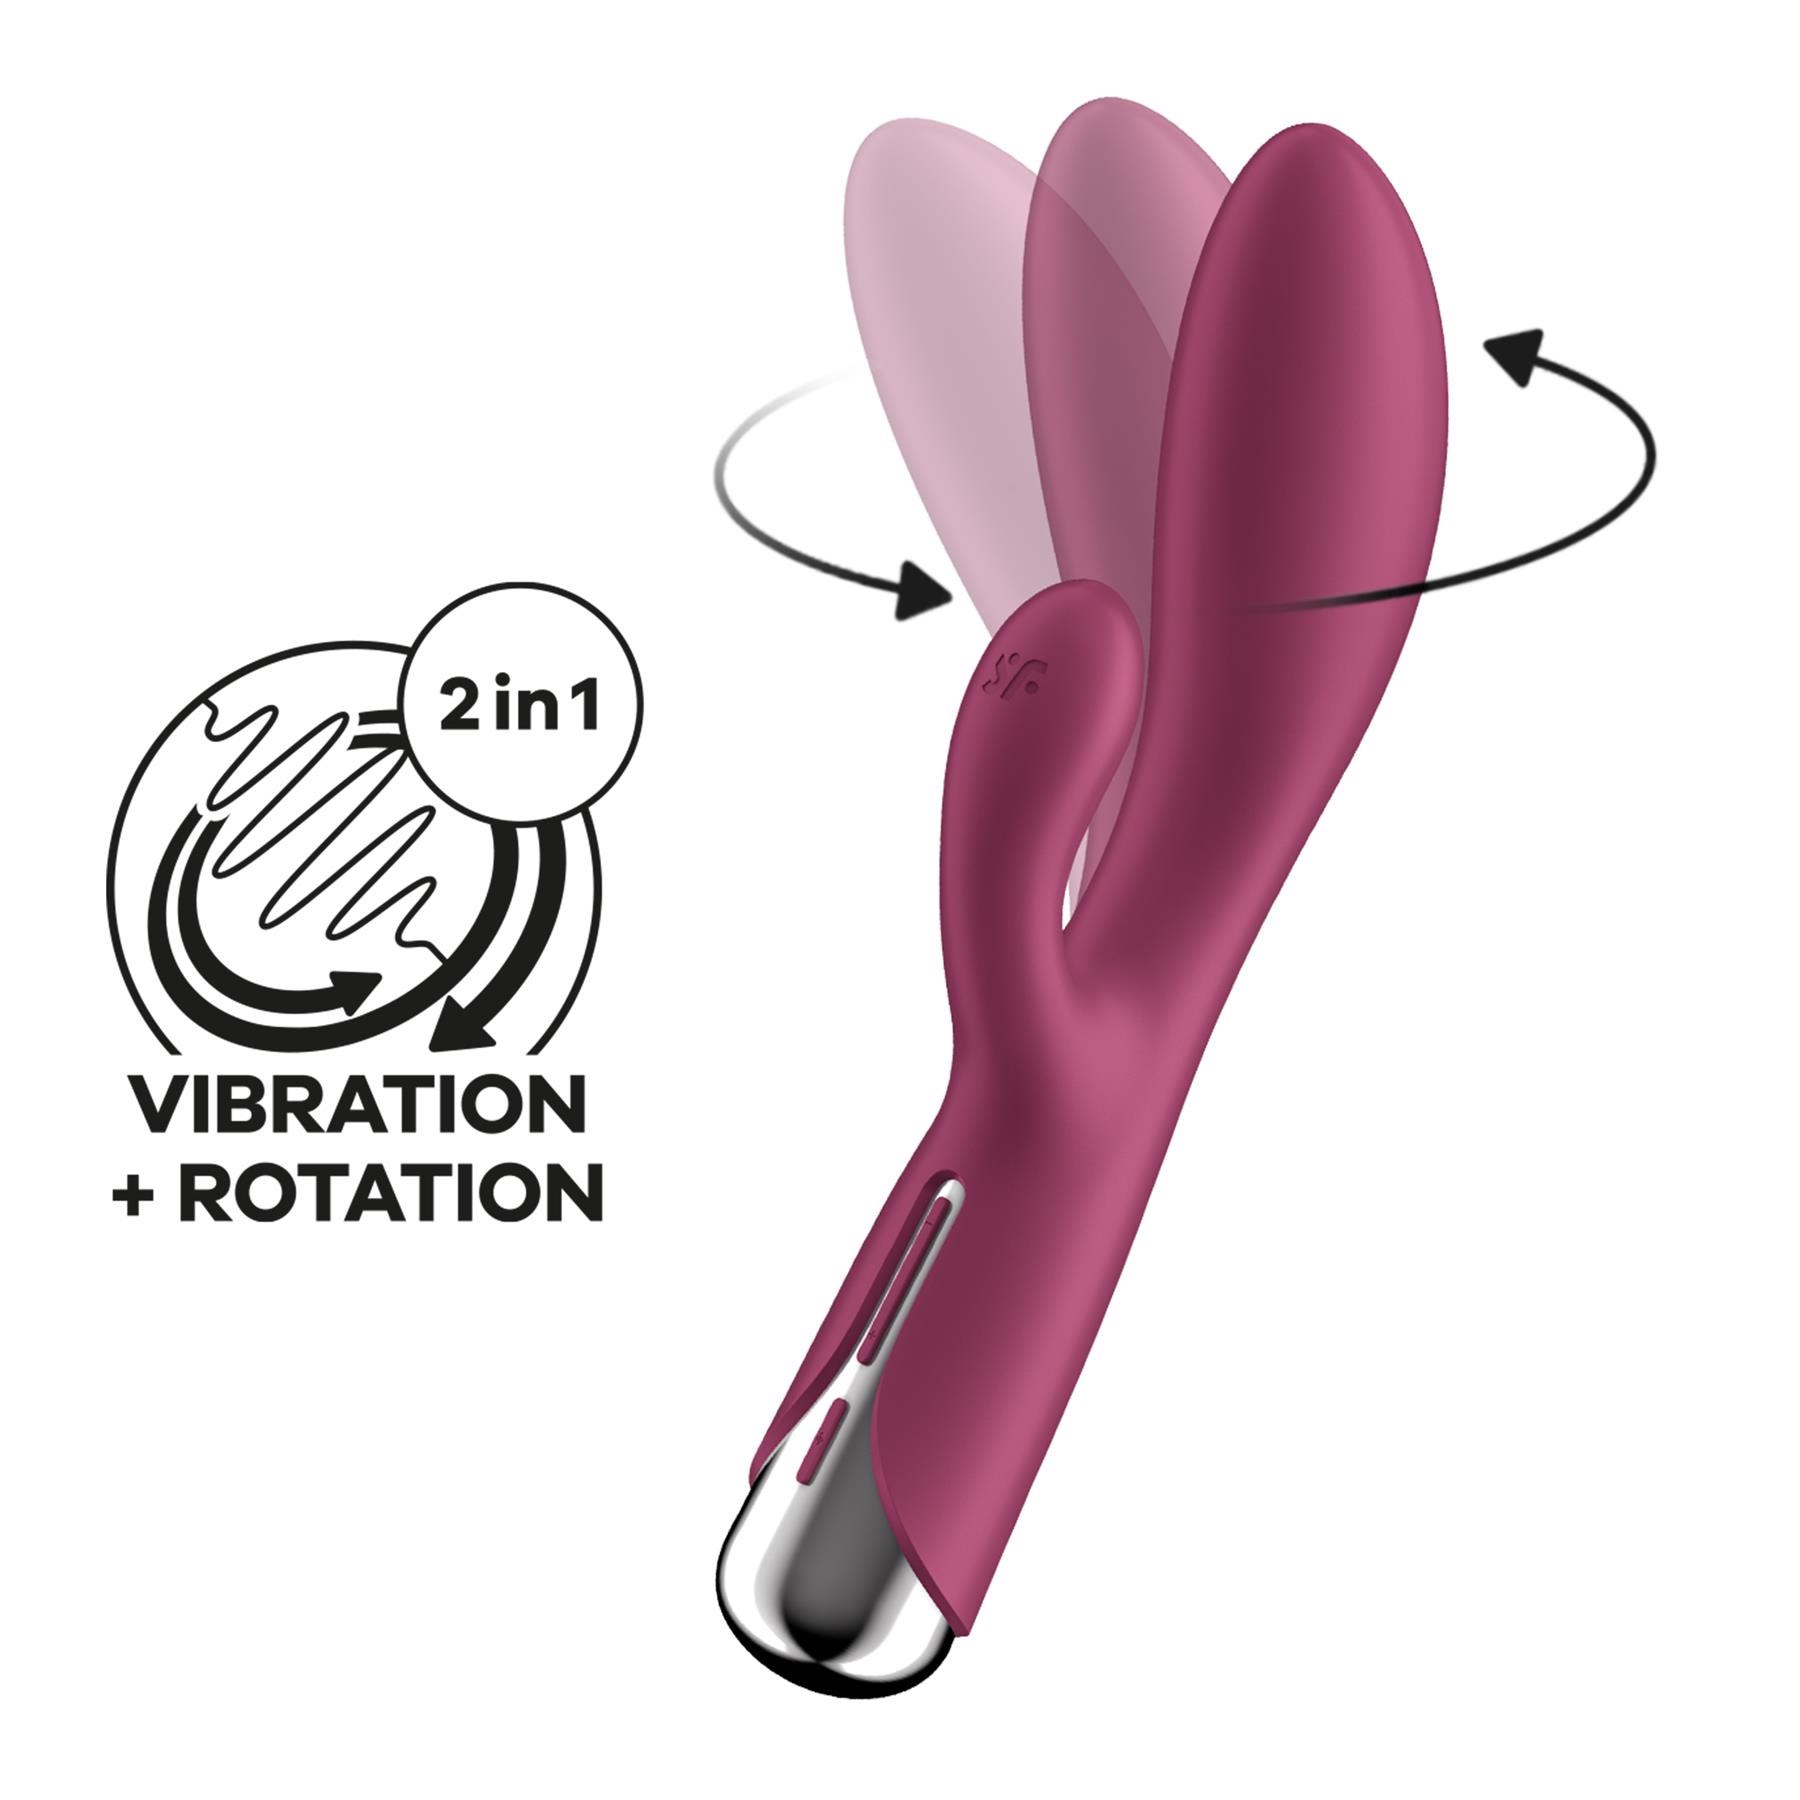 Satisfyer Spinning Rabbit Vibrator - Product Shot - Showing Spinning Motion